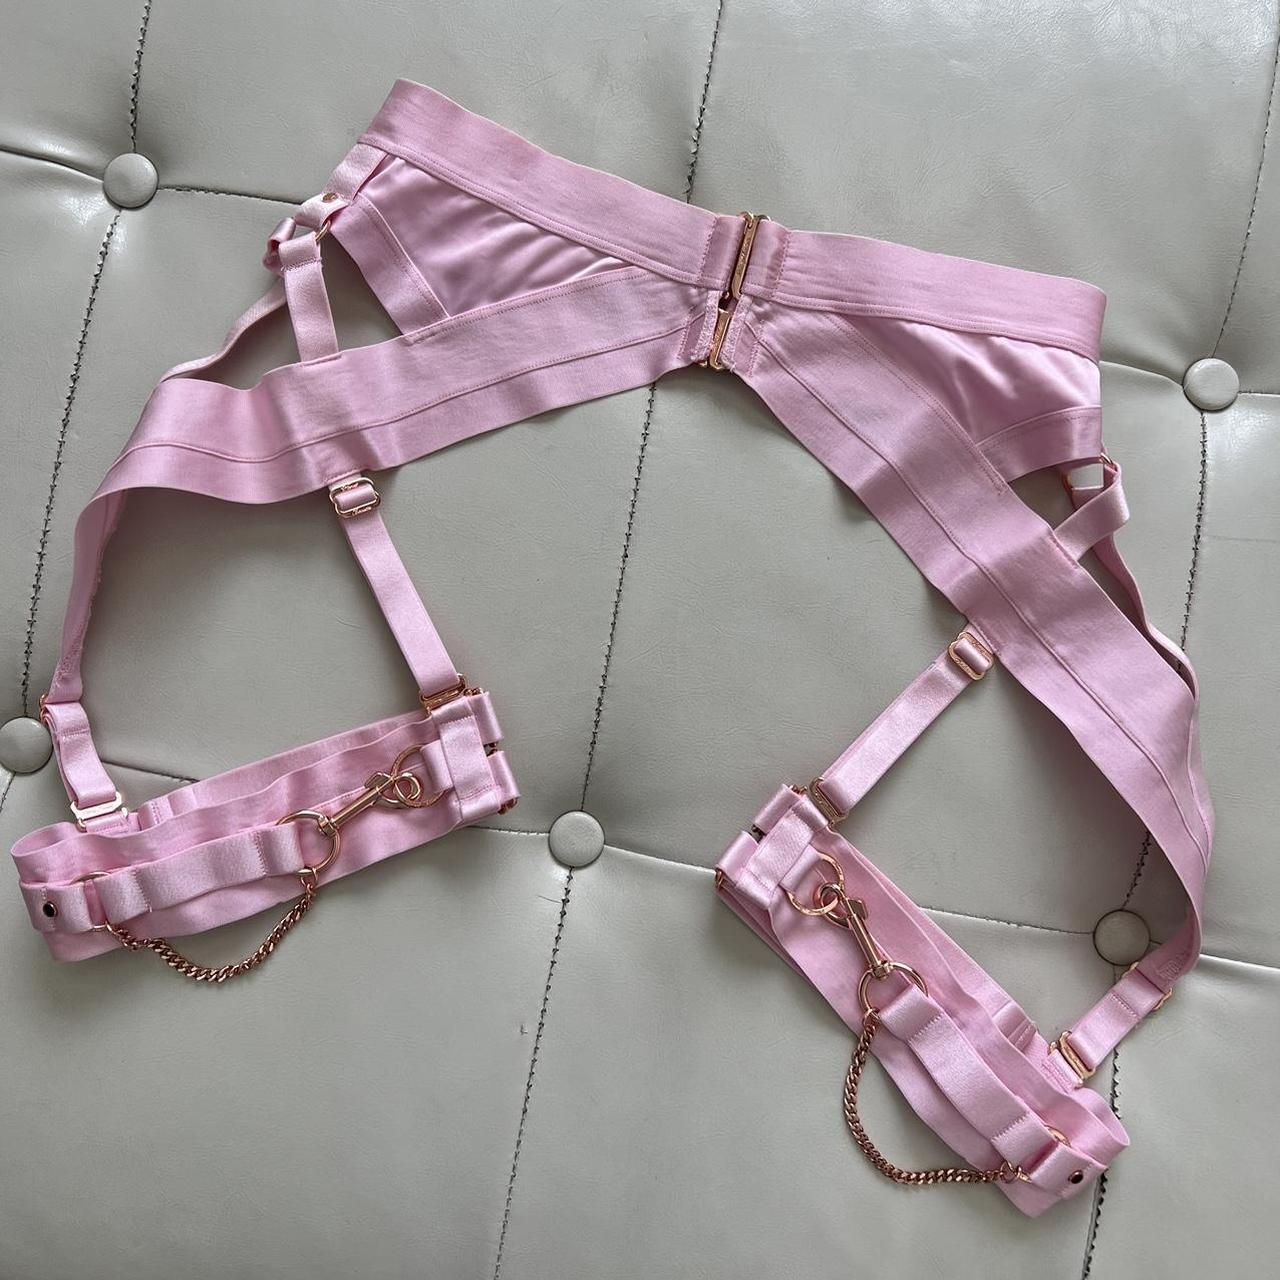 Honey Birdette Women's Pink Underwear (2)